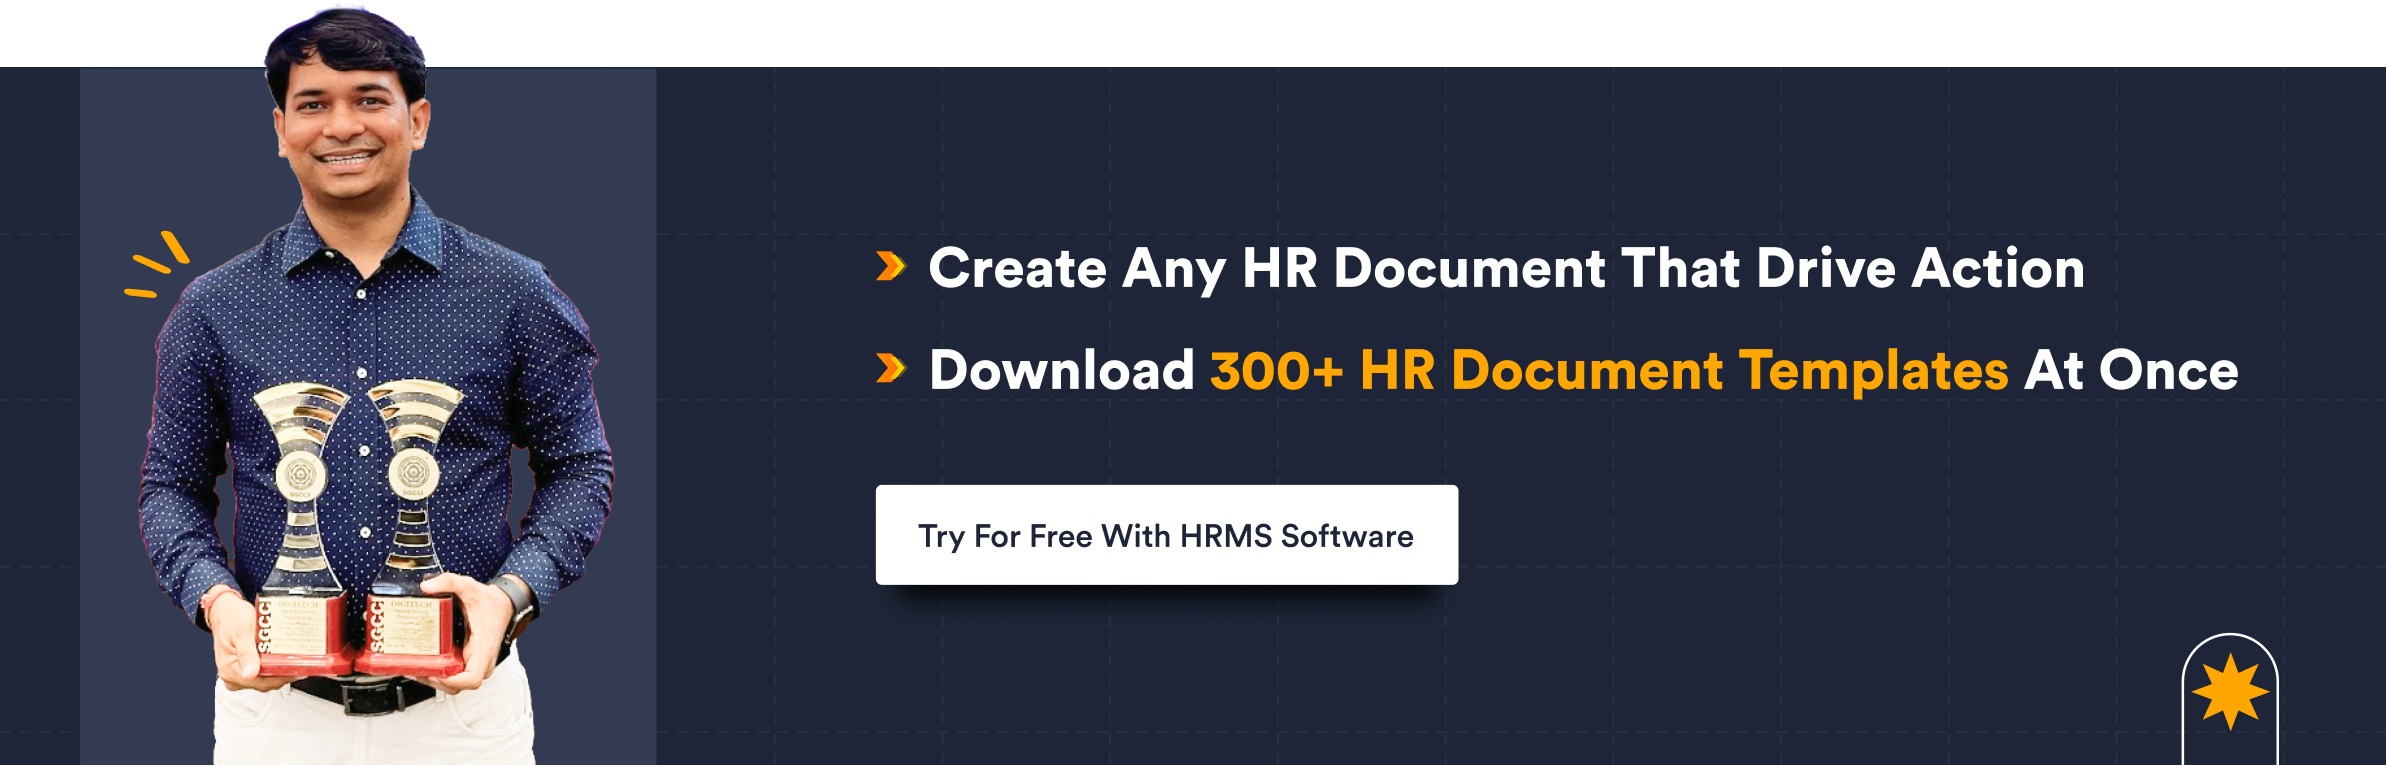 HR Document